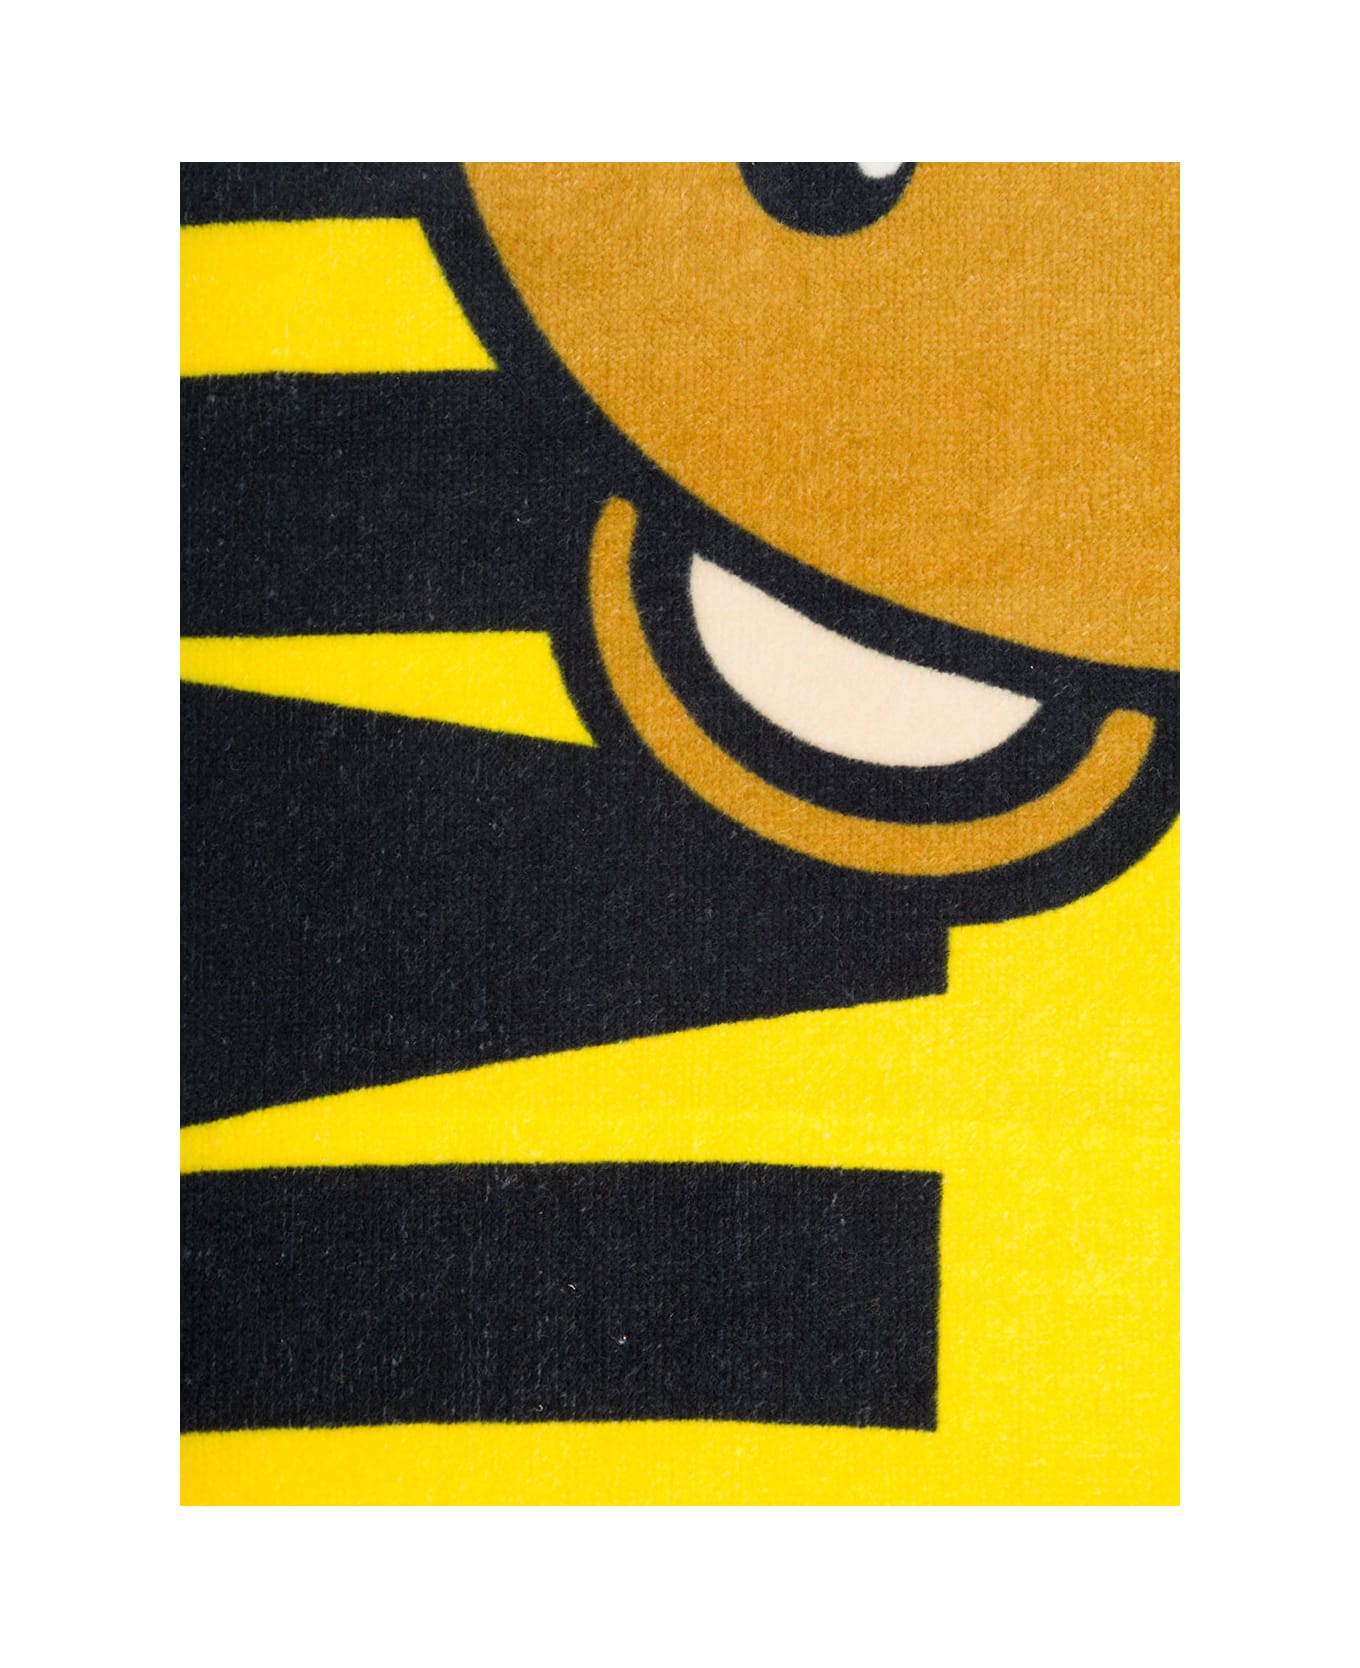 Moschino Yellow Beach Towel With Teddy Bear Print In Cotton - Yellow インテリア雑貨